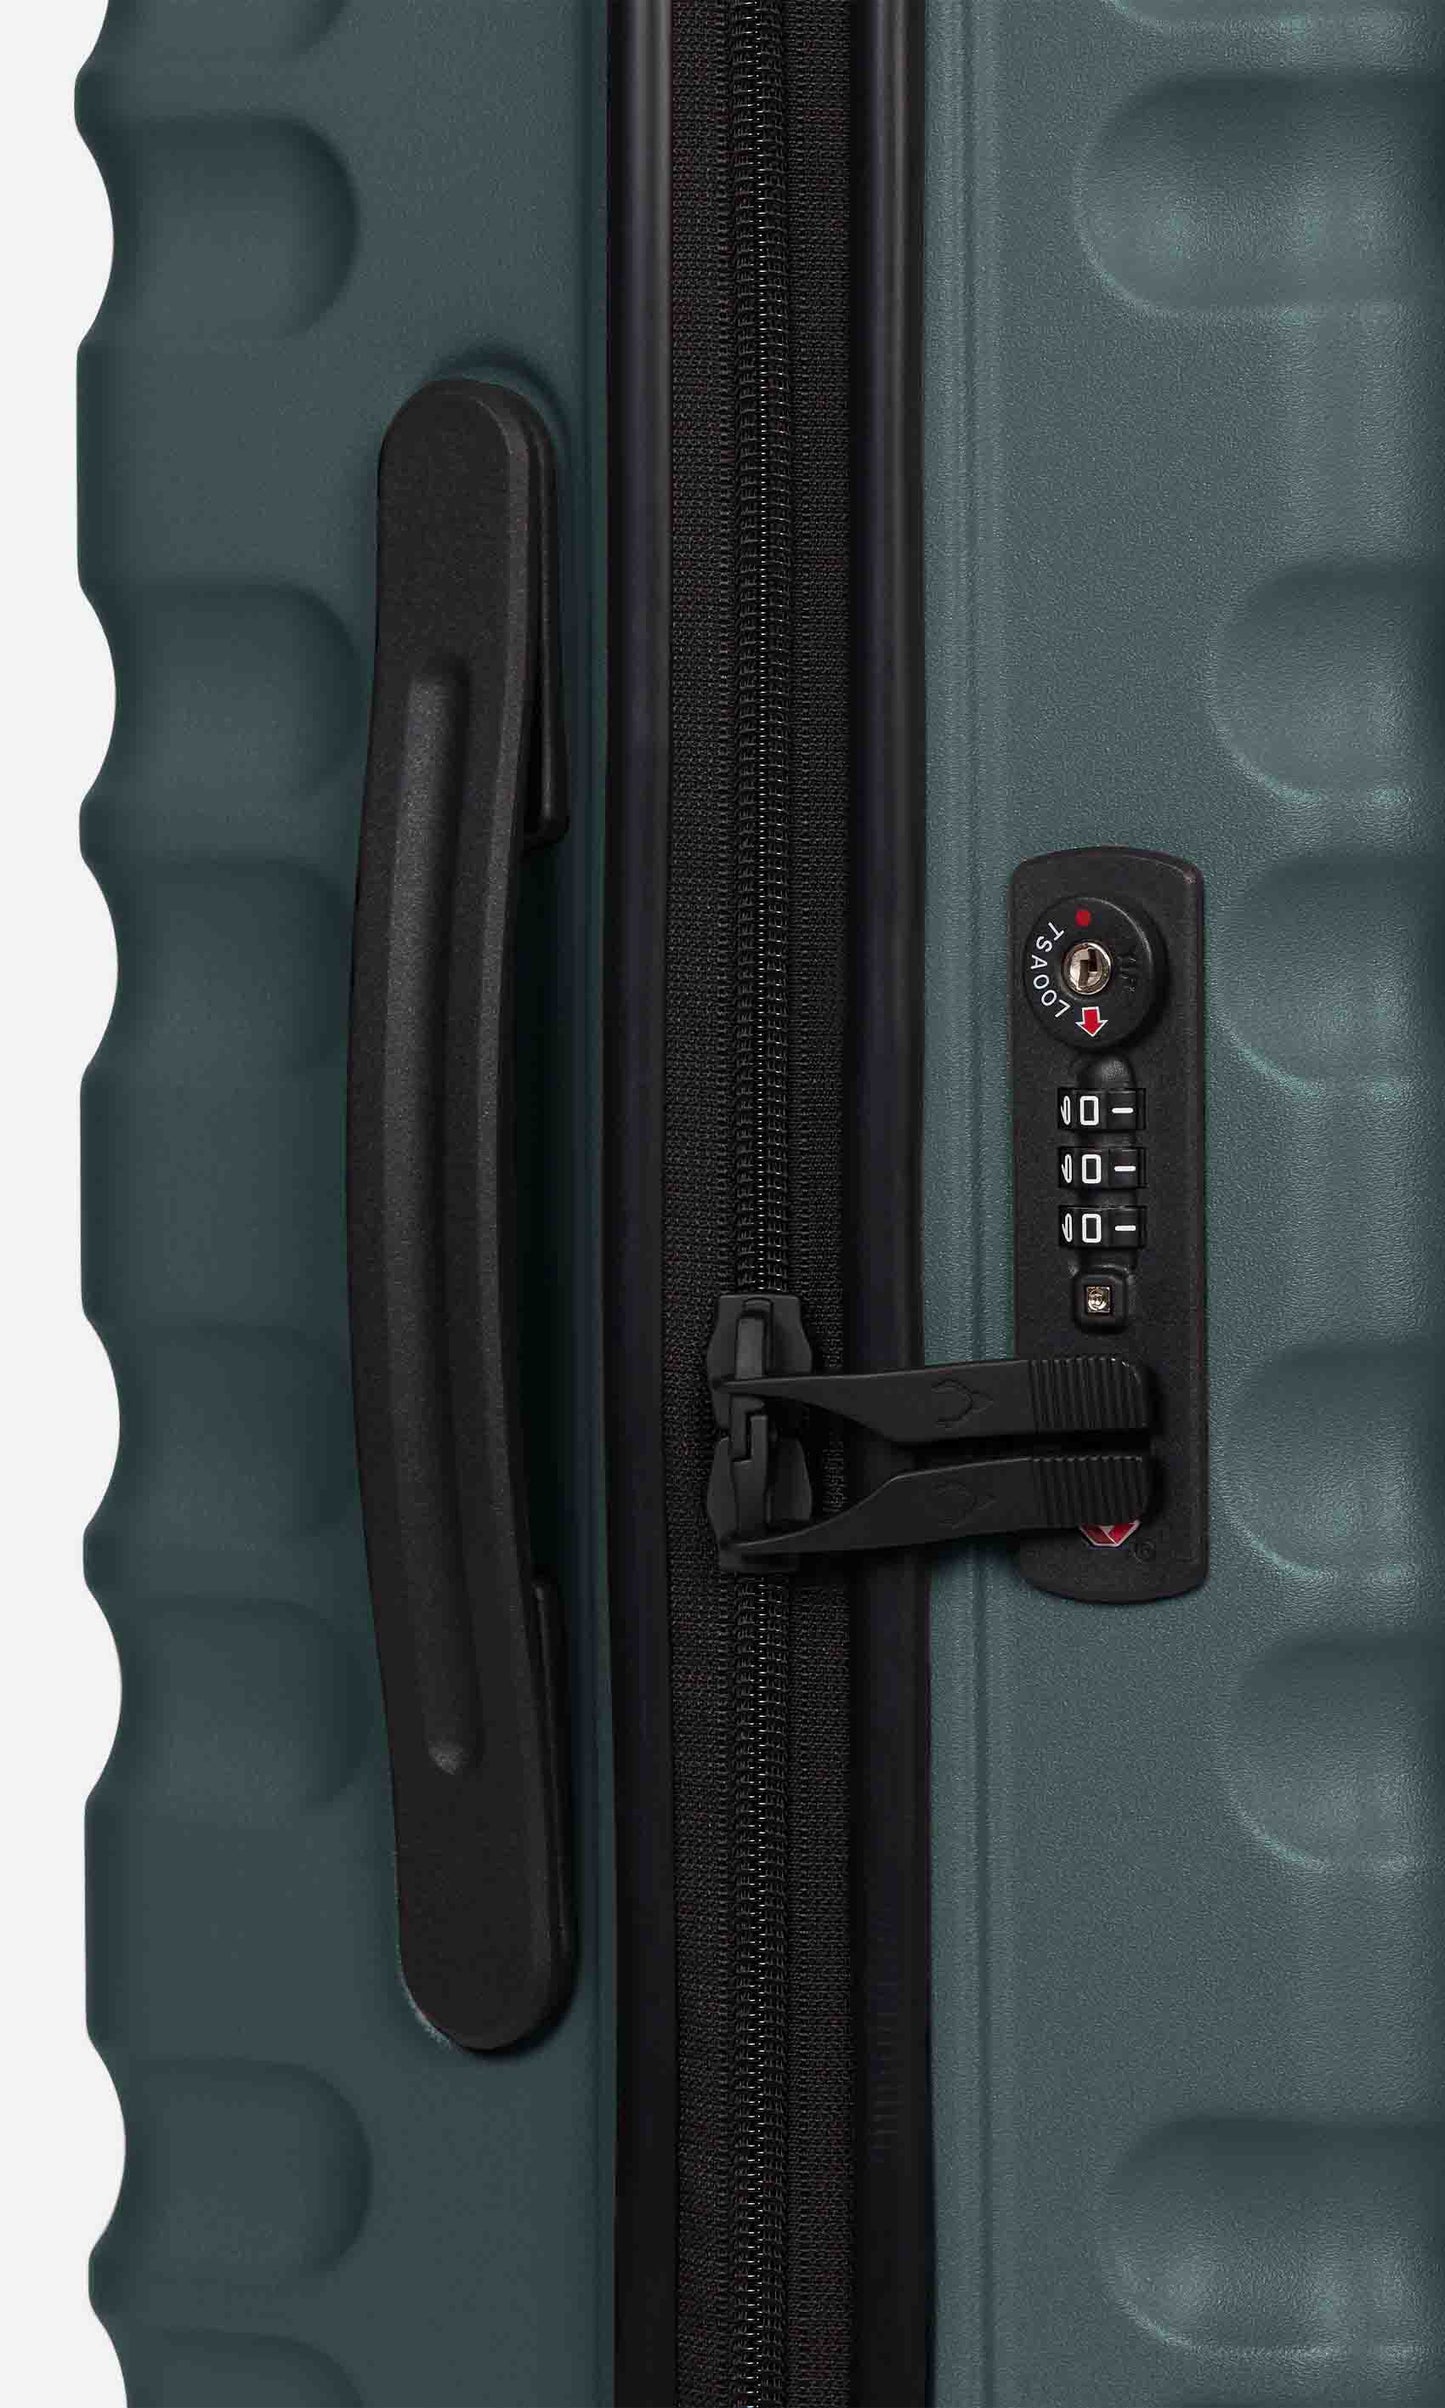 Antler Luggage -  Clifton cabin in sycamore - Hard Suitcases Clifton 55x40x20cm Cabin Suitcase Sycamore (Green) | Hard Suitcase | Antler UK